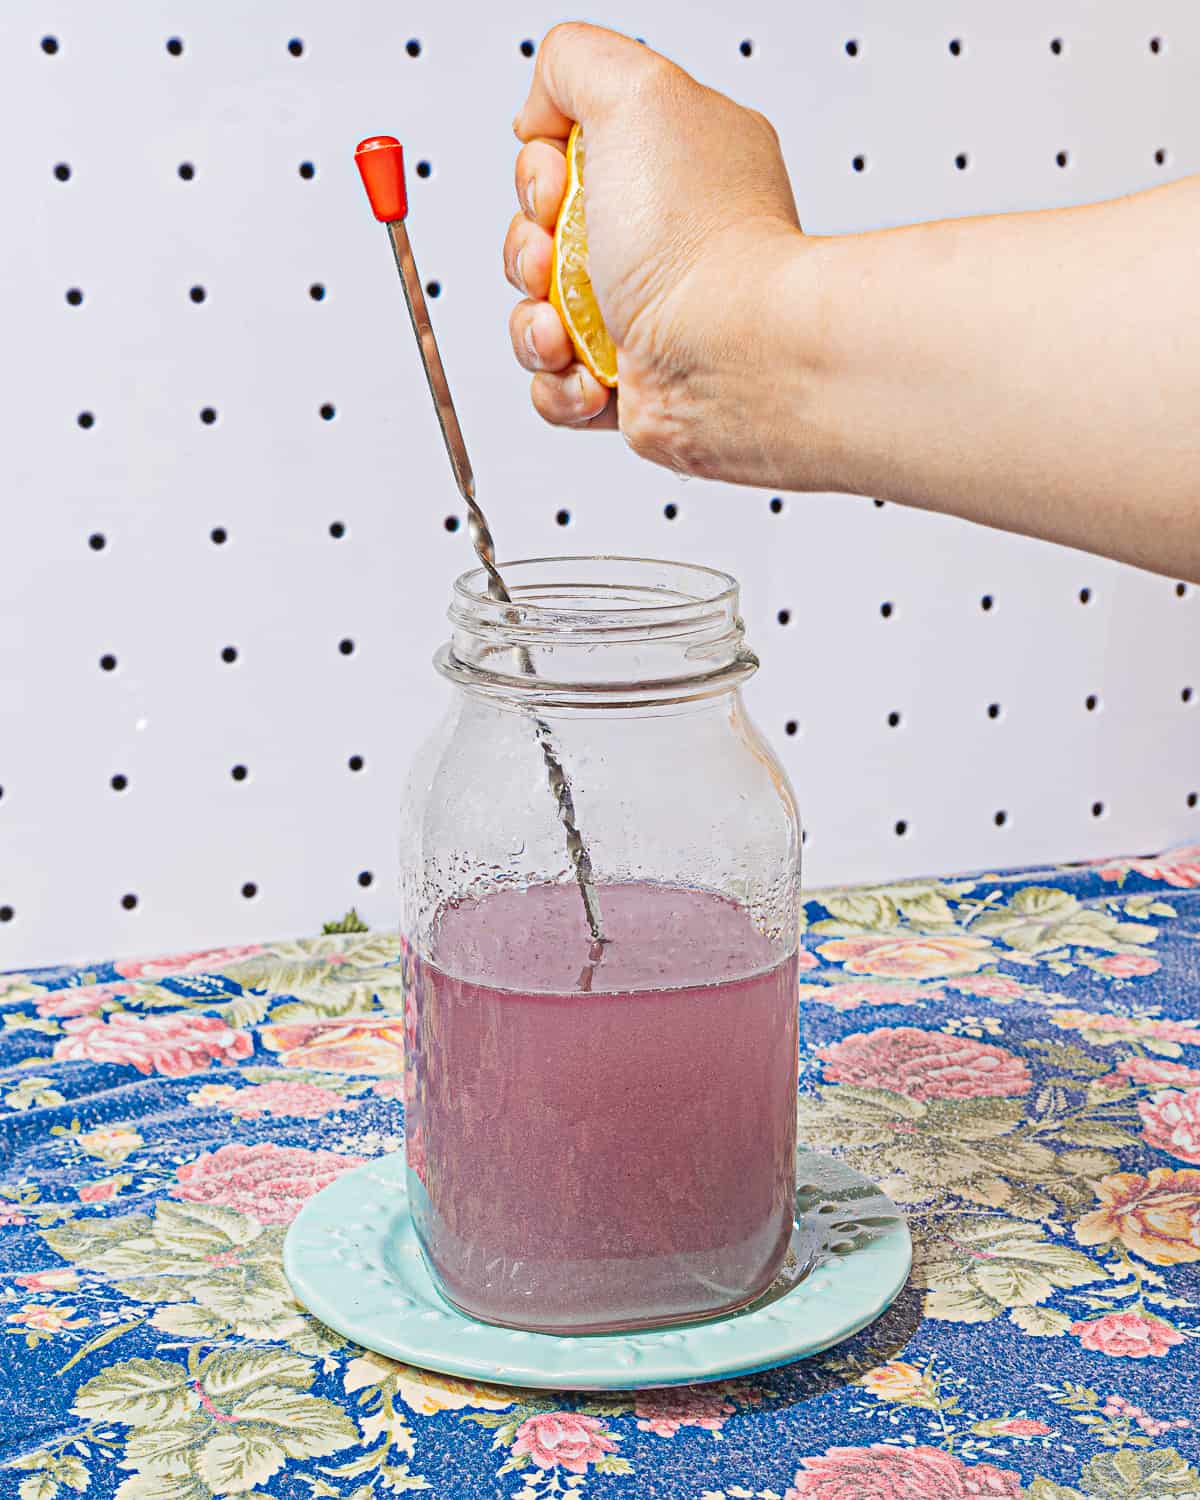 person squeezing lemon into mason jar filled with light purple liquid